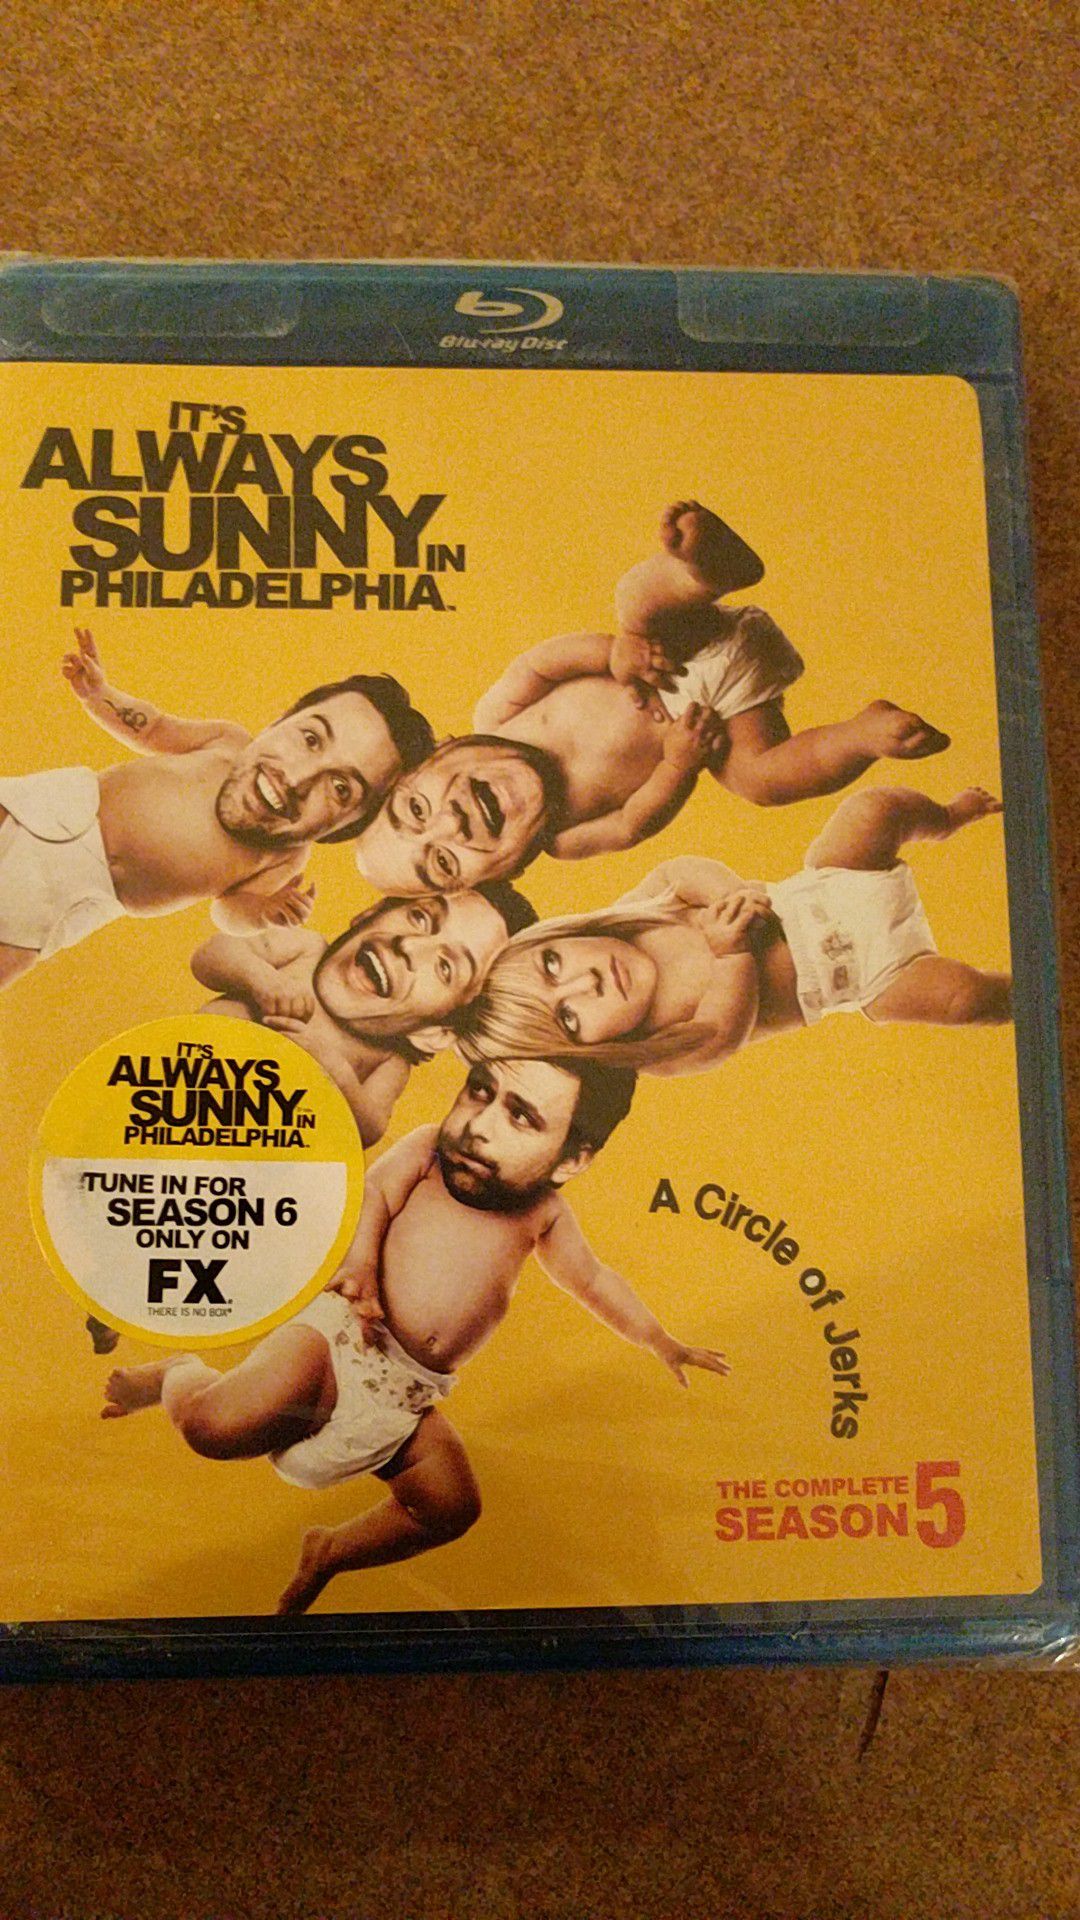 Complete It's always Sunny in Philadelphia season 5 bluray